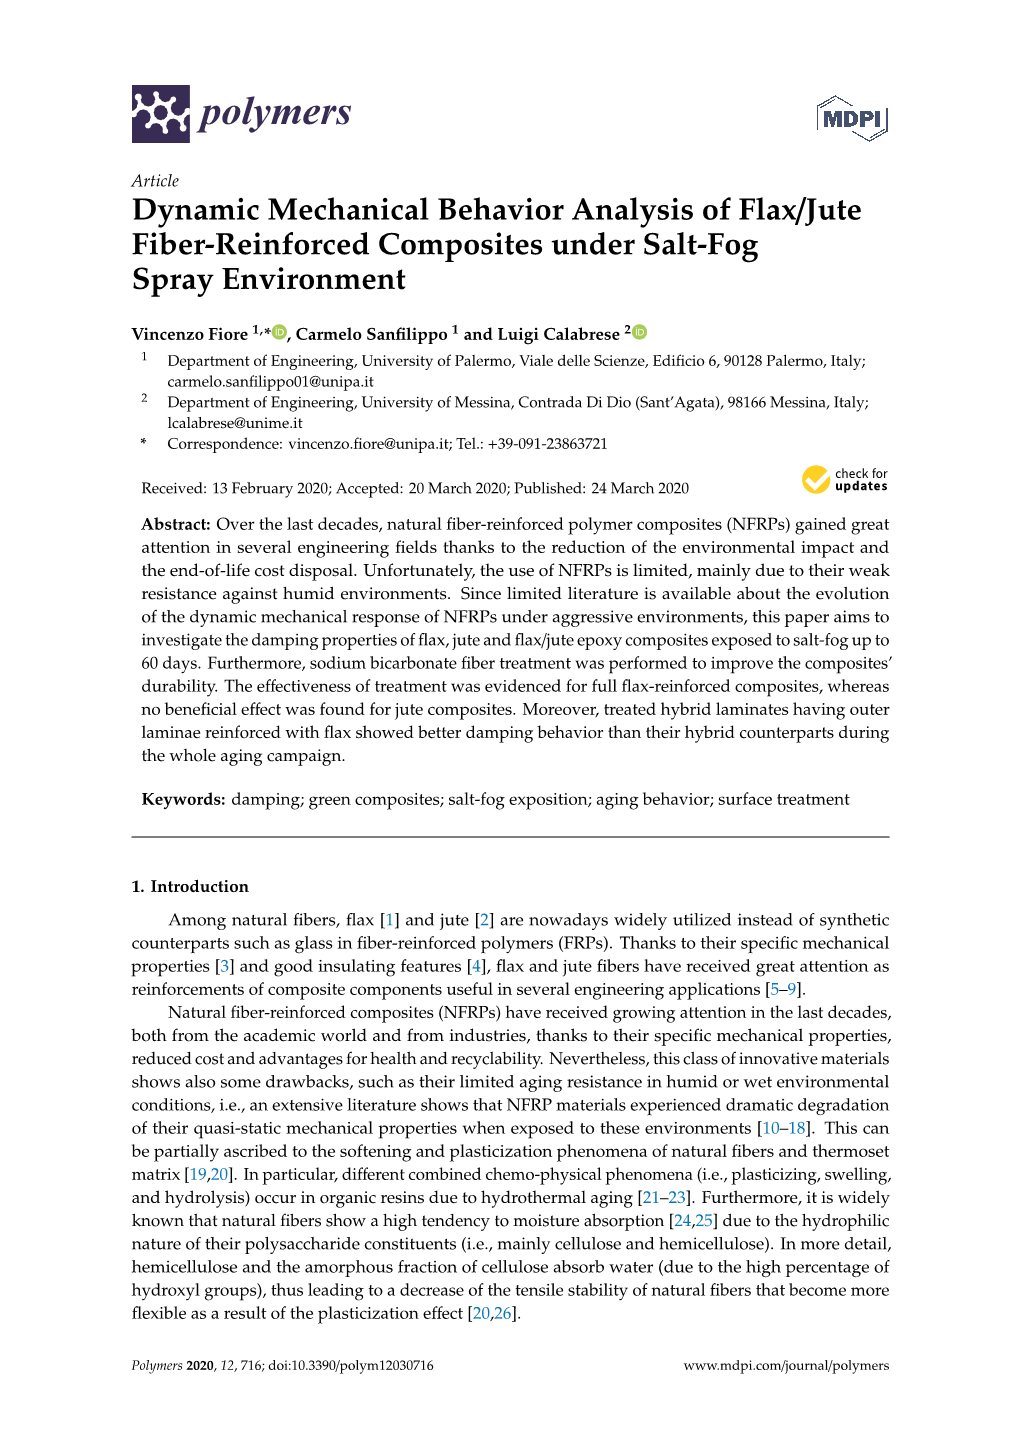 Dynamic Mechanical Behavior Analysis of Flax/Jute Fiber-Reinforced Composites Under Salt-Fog Spray Environment